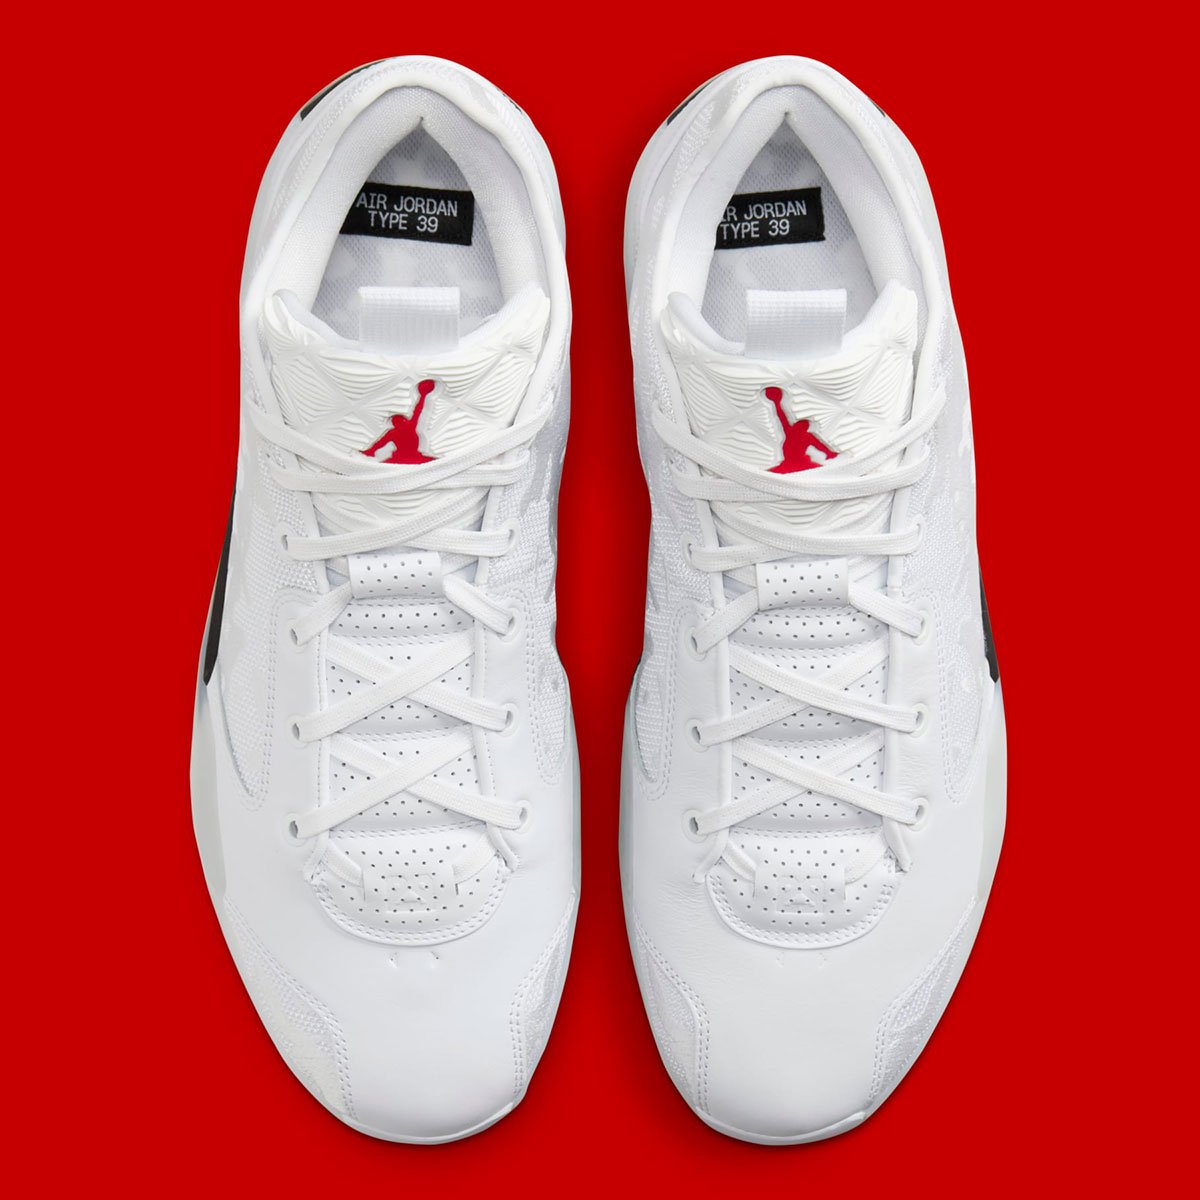 Air Jordan 1 Store List Sol Fq0213 106 Release Date 8